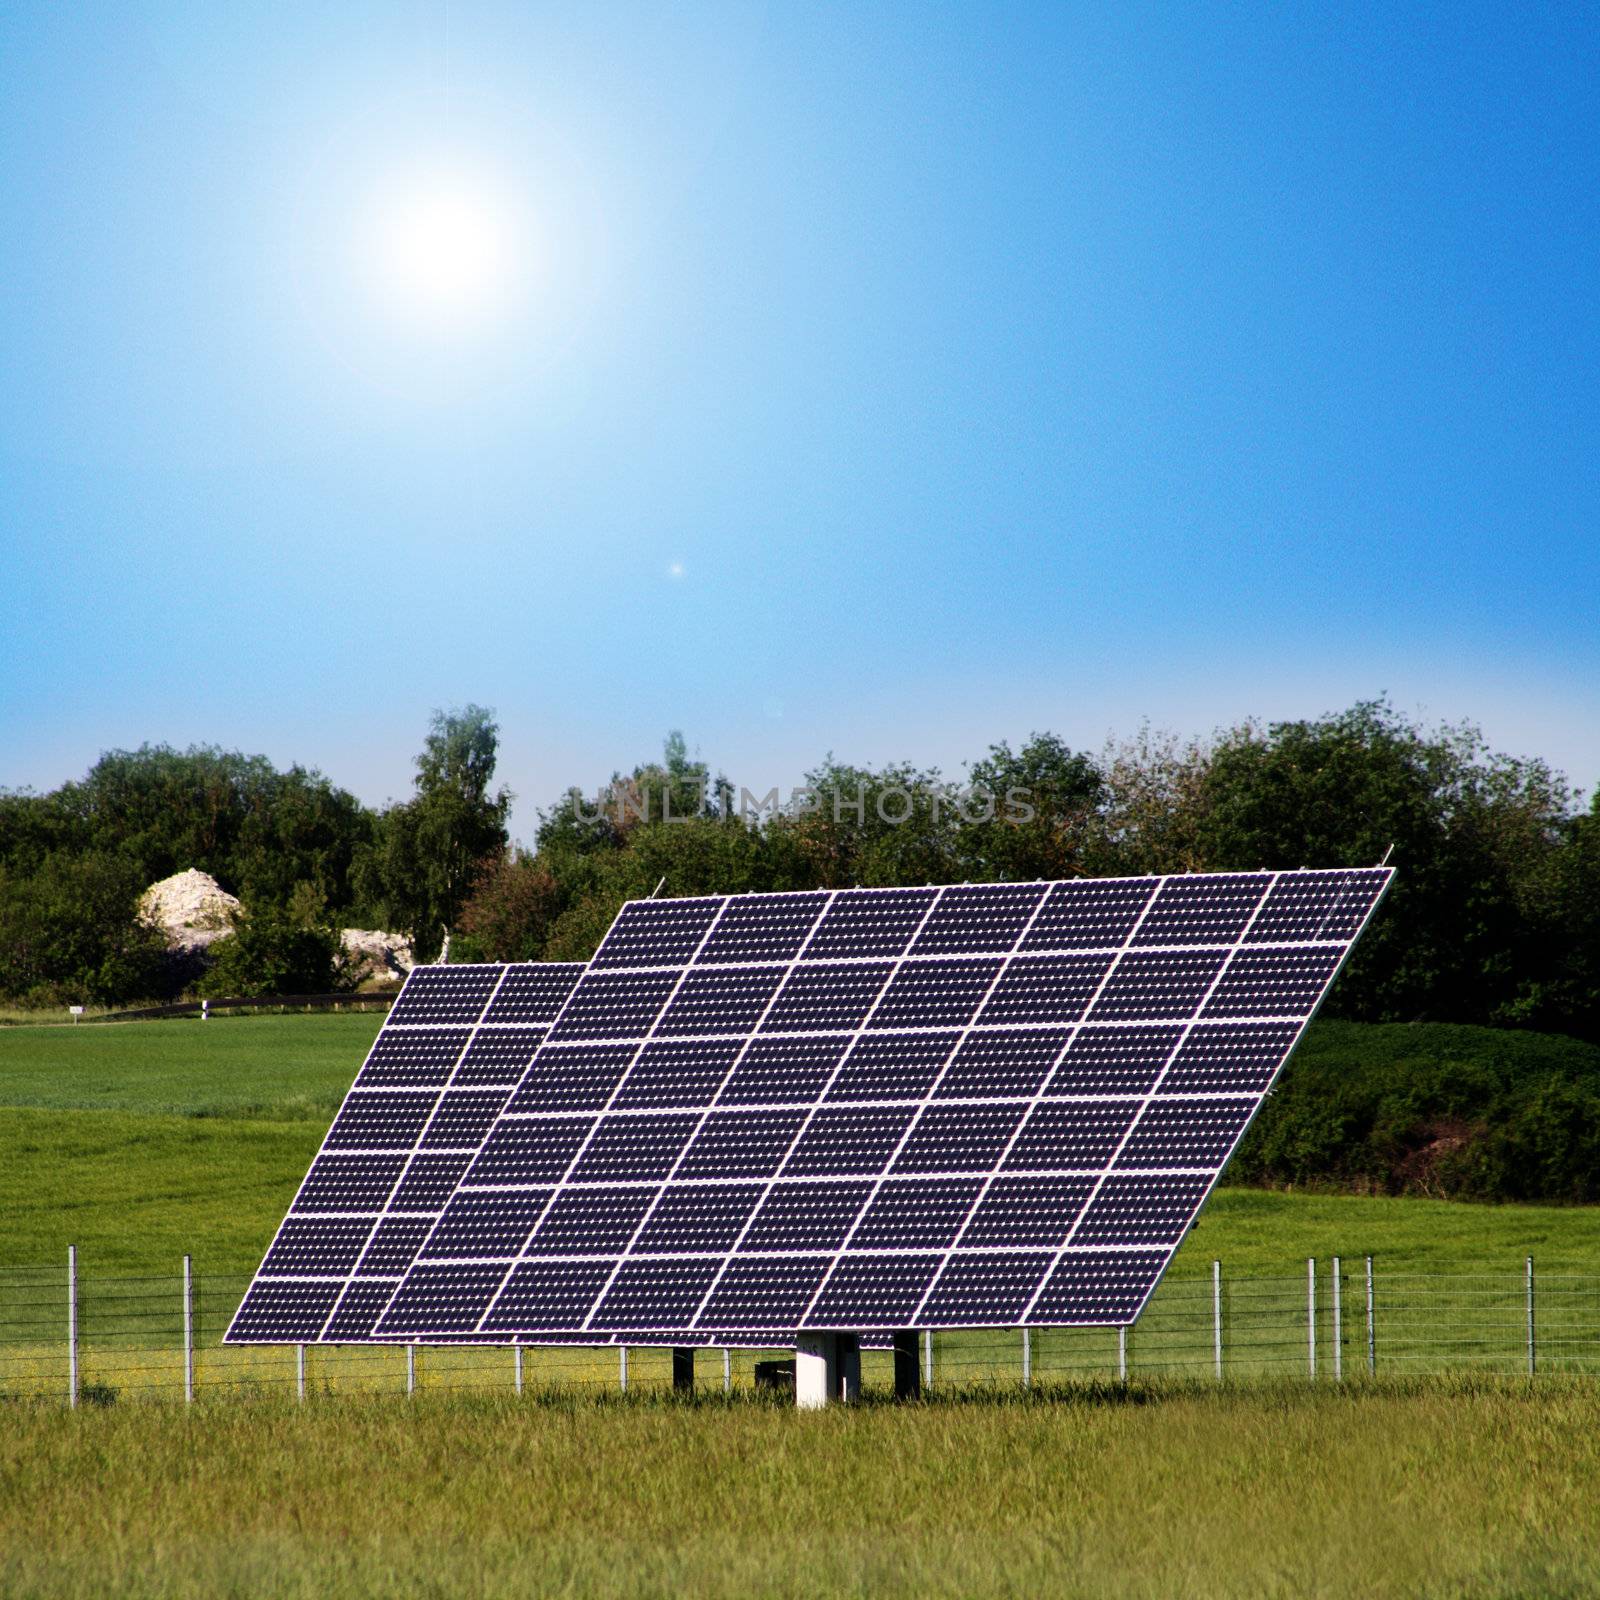 solar plants in the field by photochecker